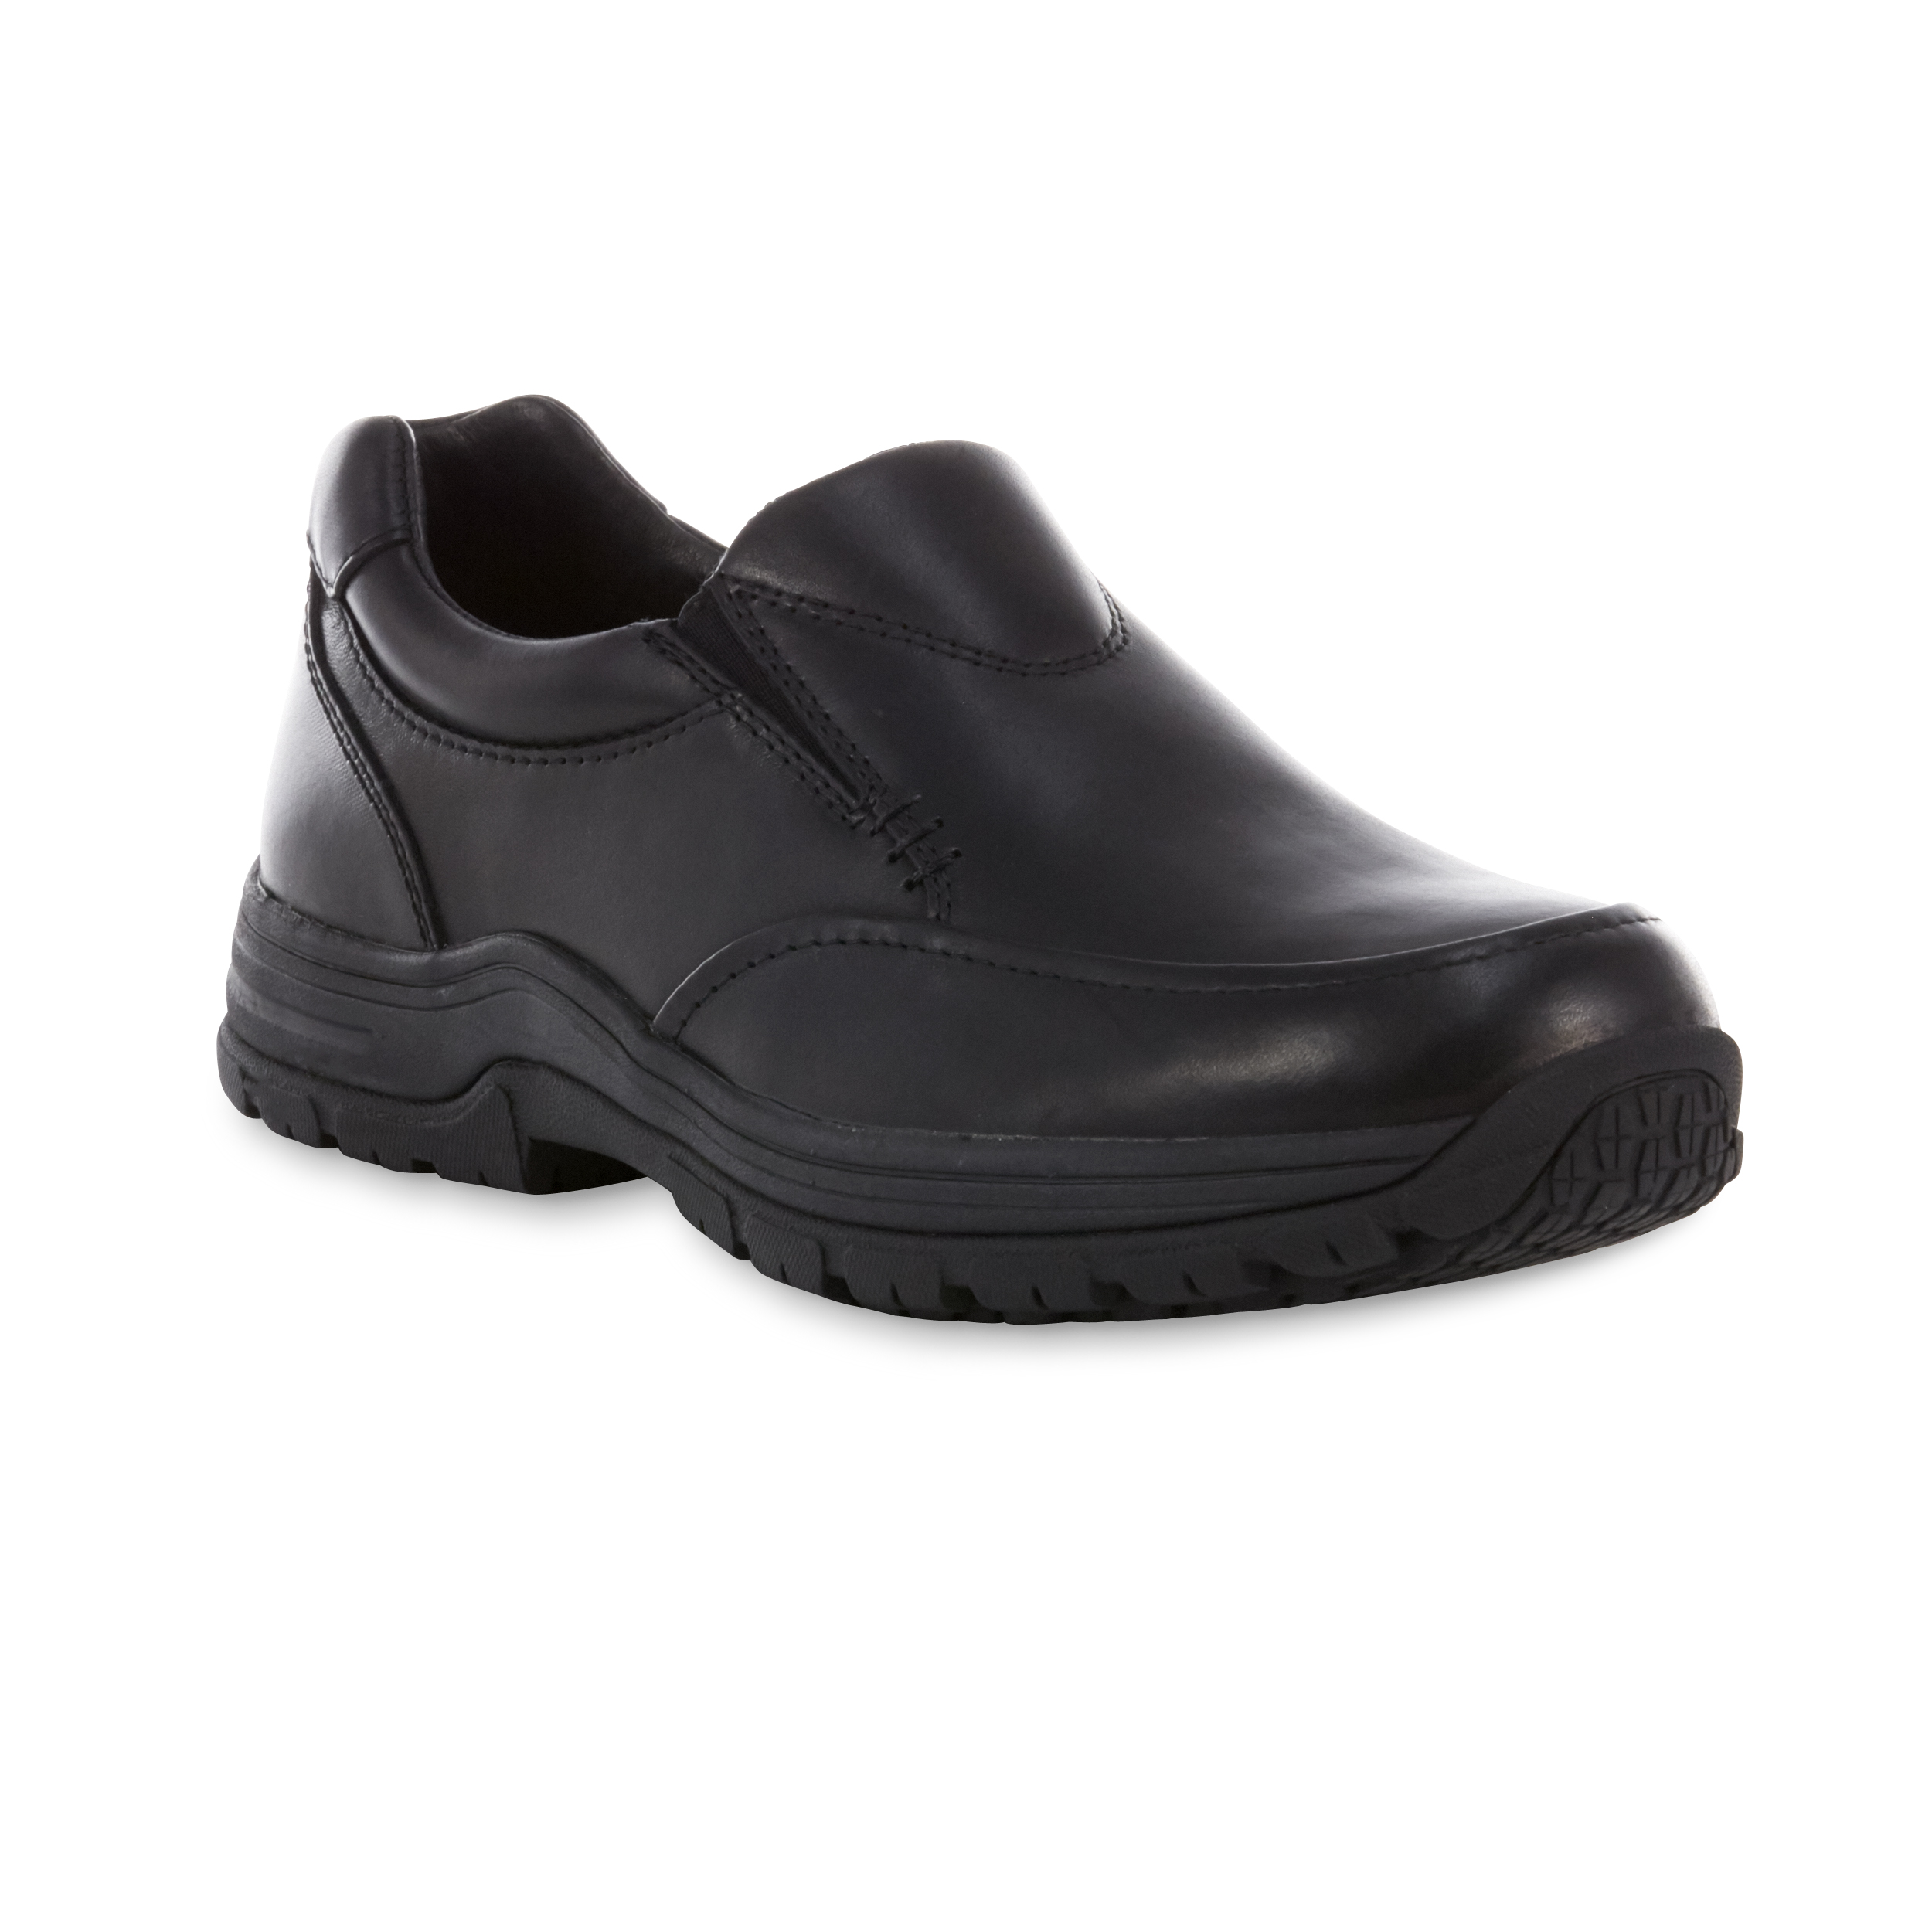 slip resistant work shoes